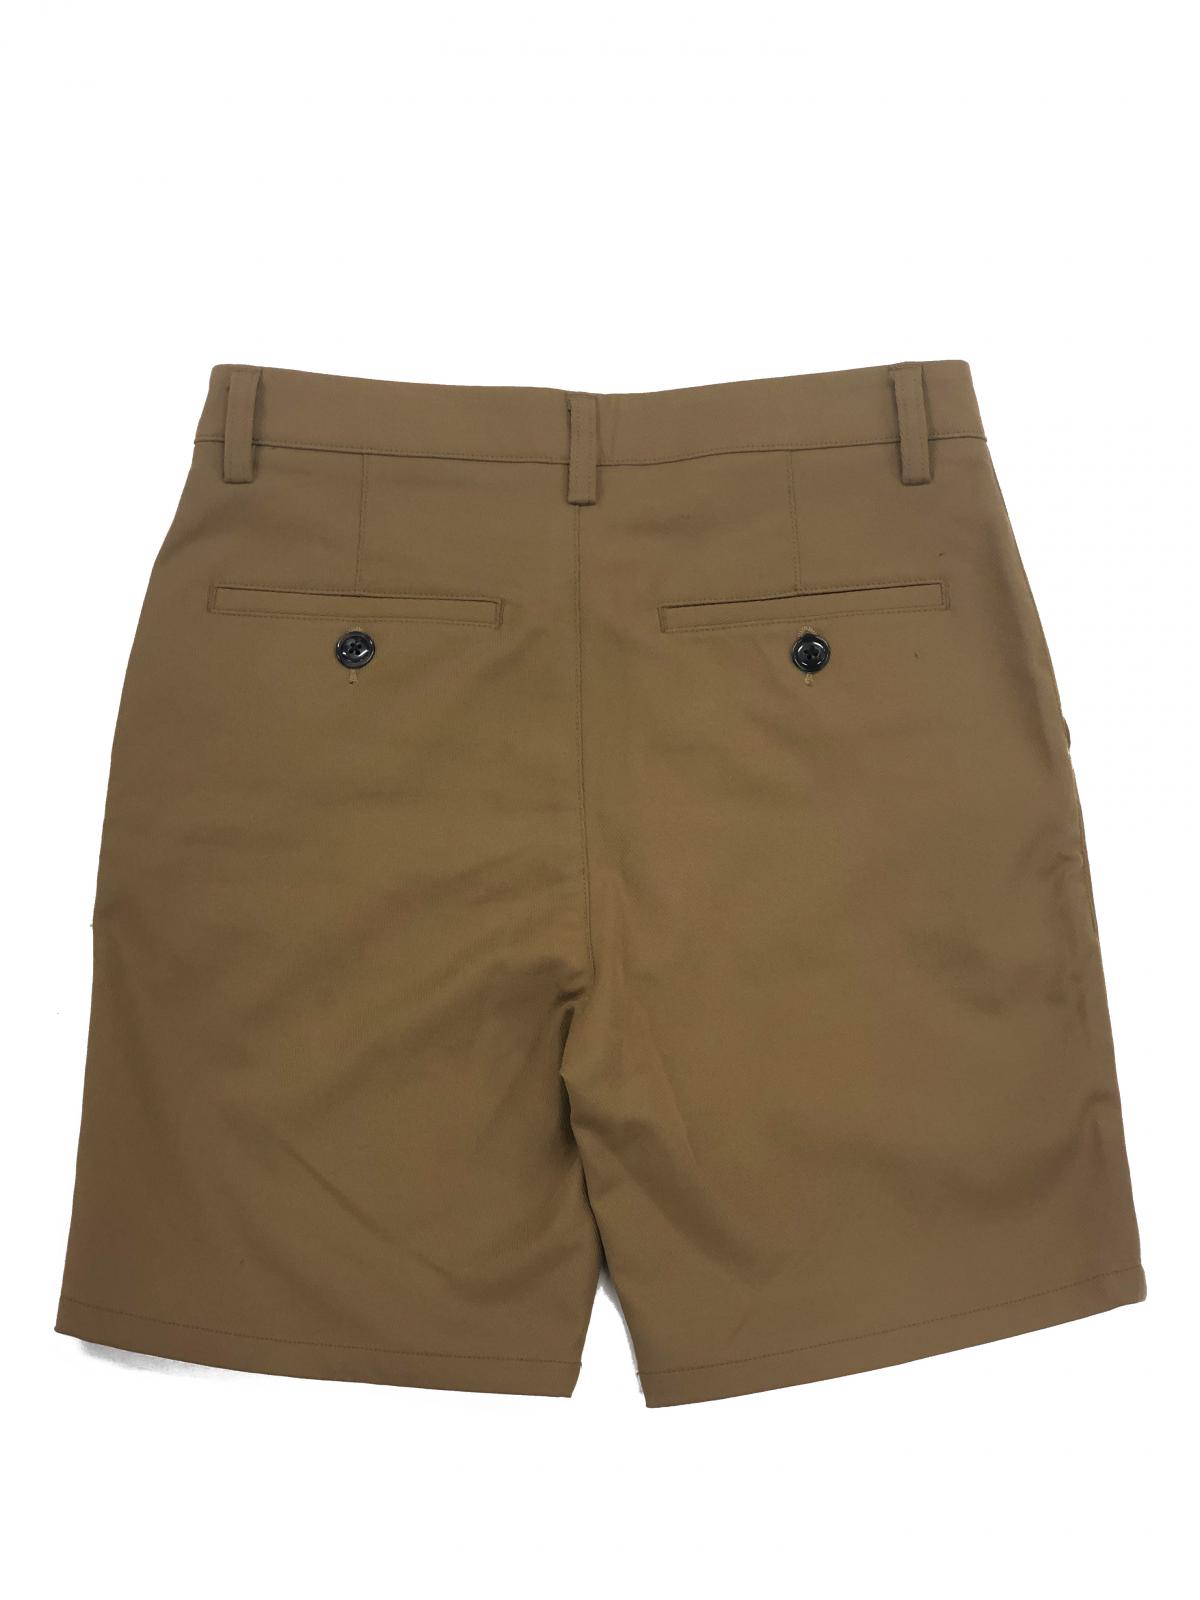 Men's Kaki Shorts SS0005 #1